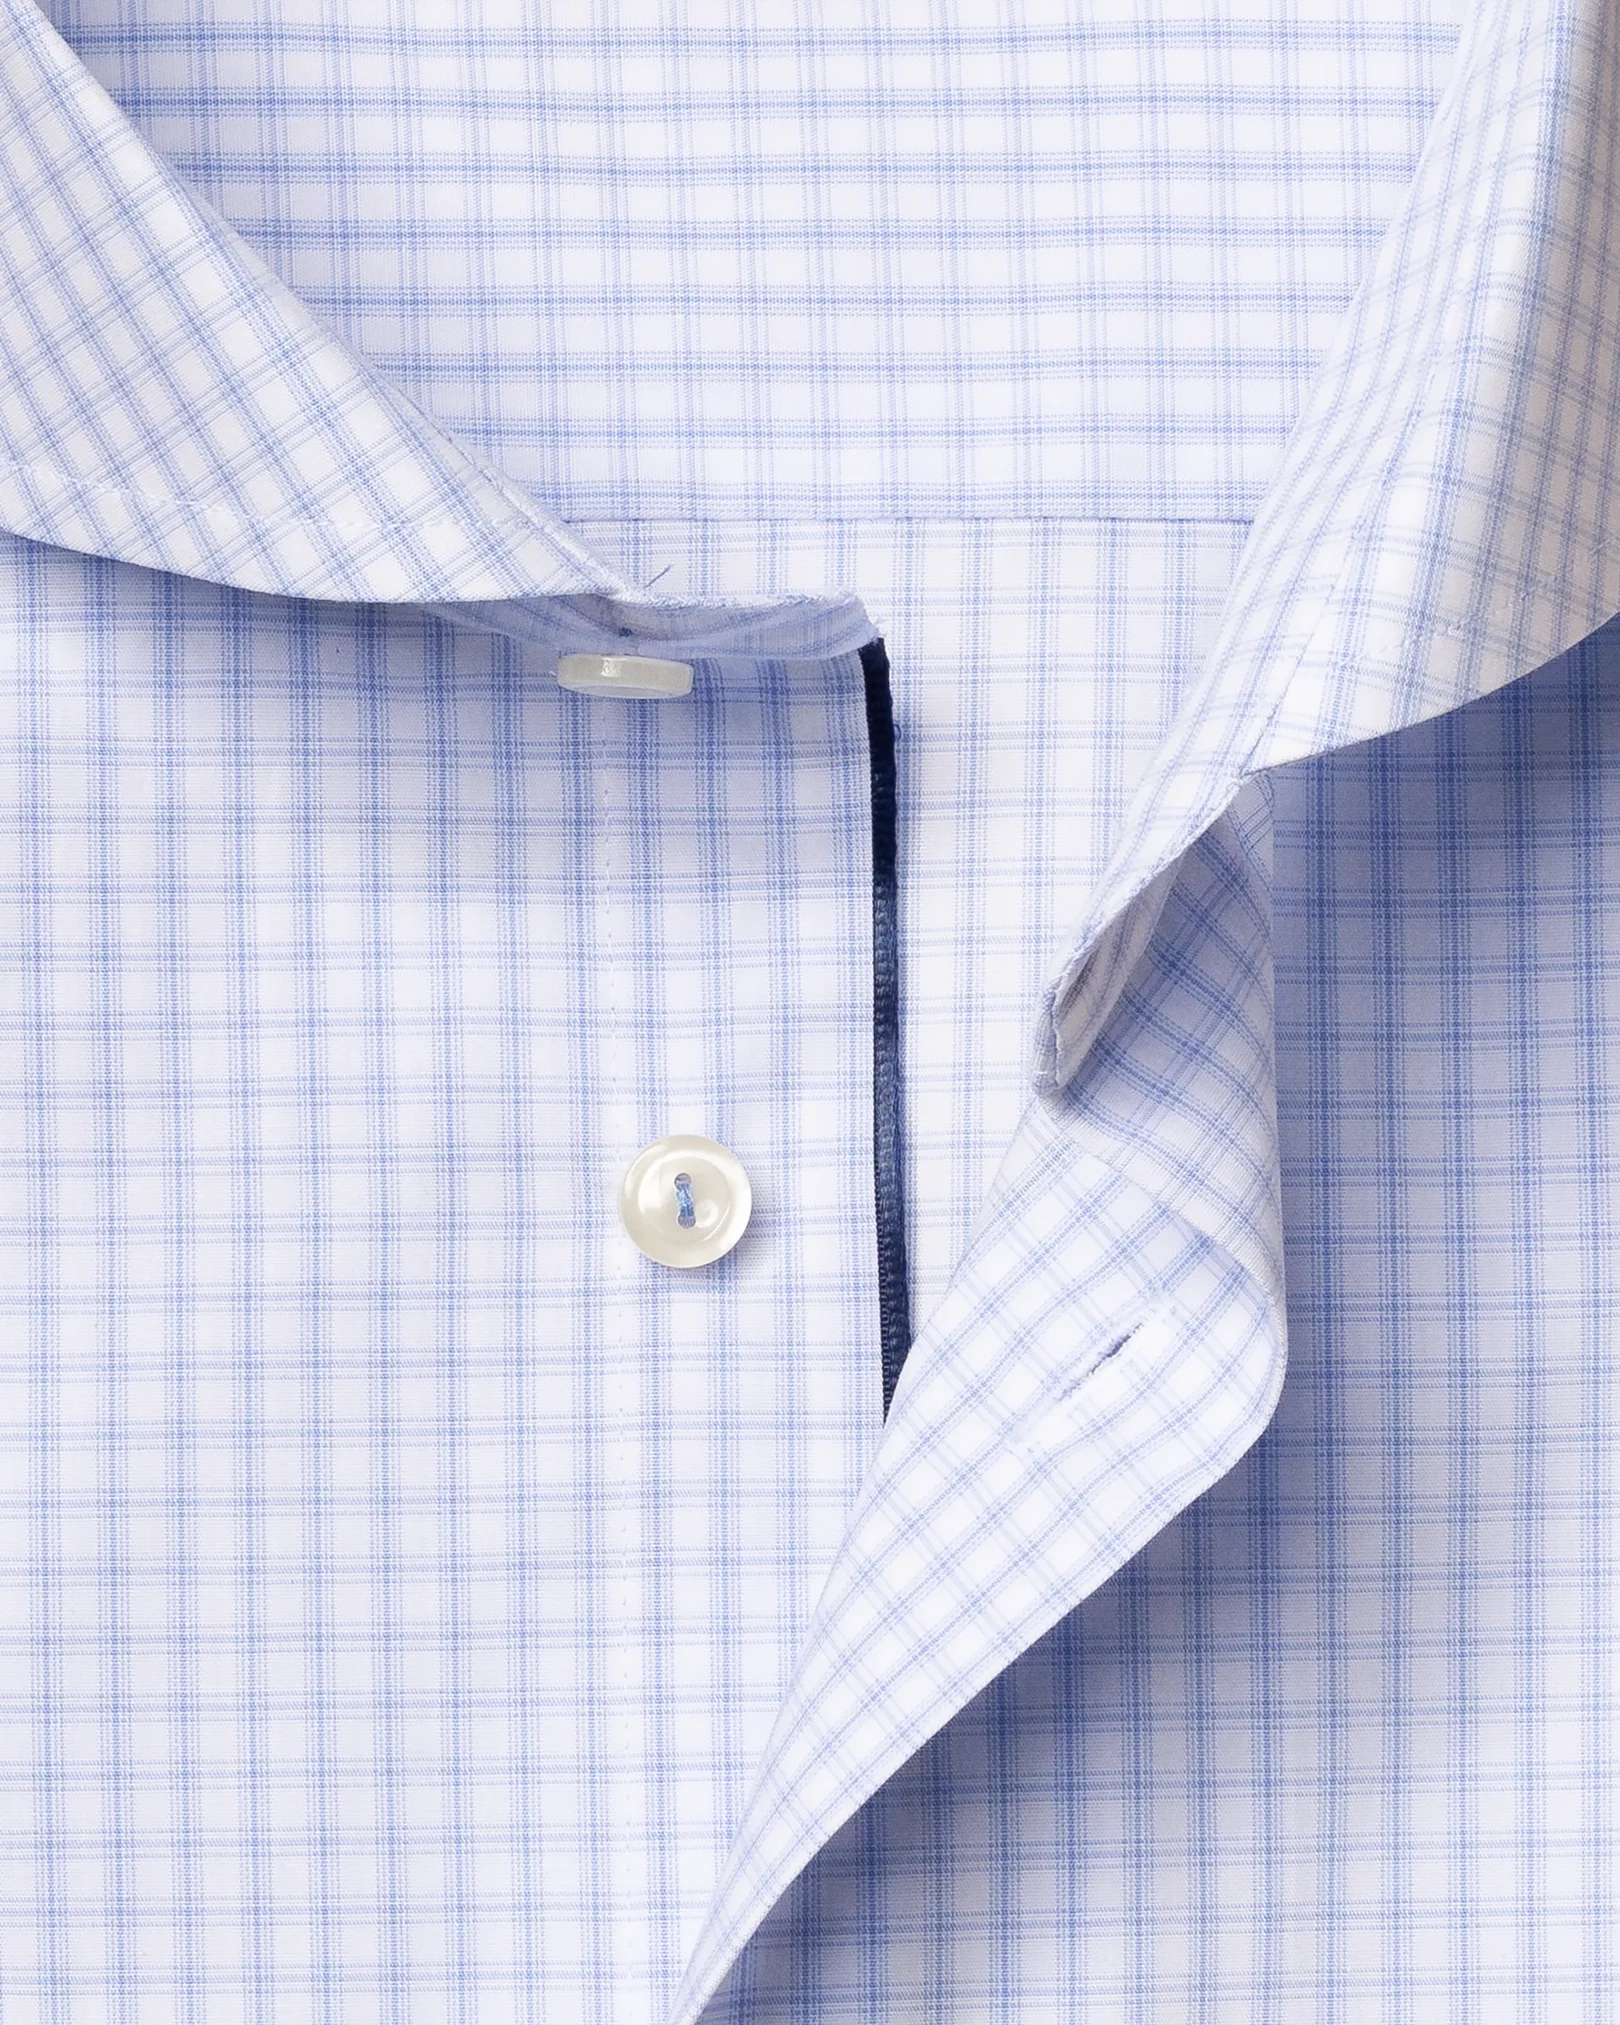 Eton - light blue checks poplin shirt extreme cut away